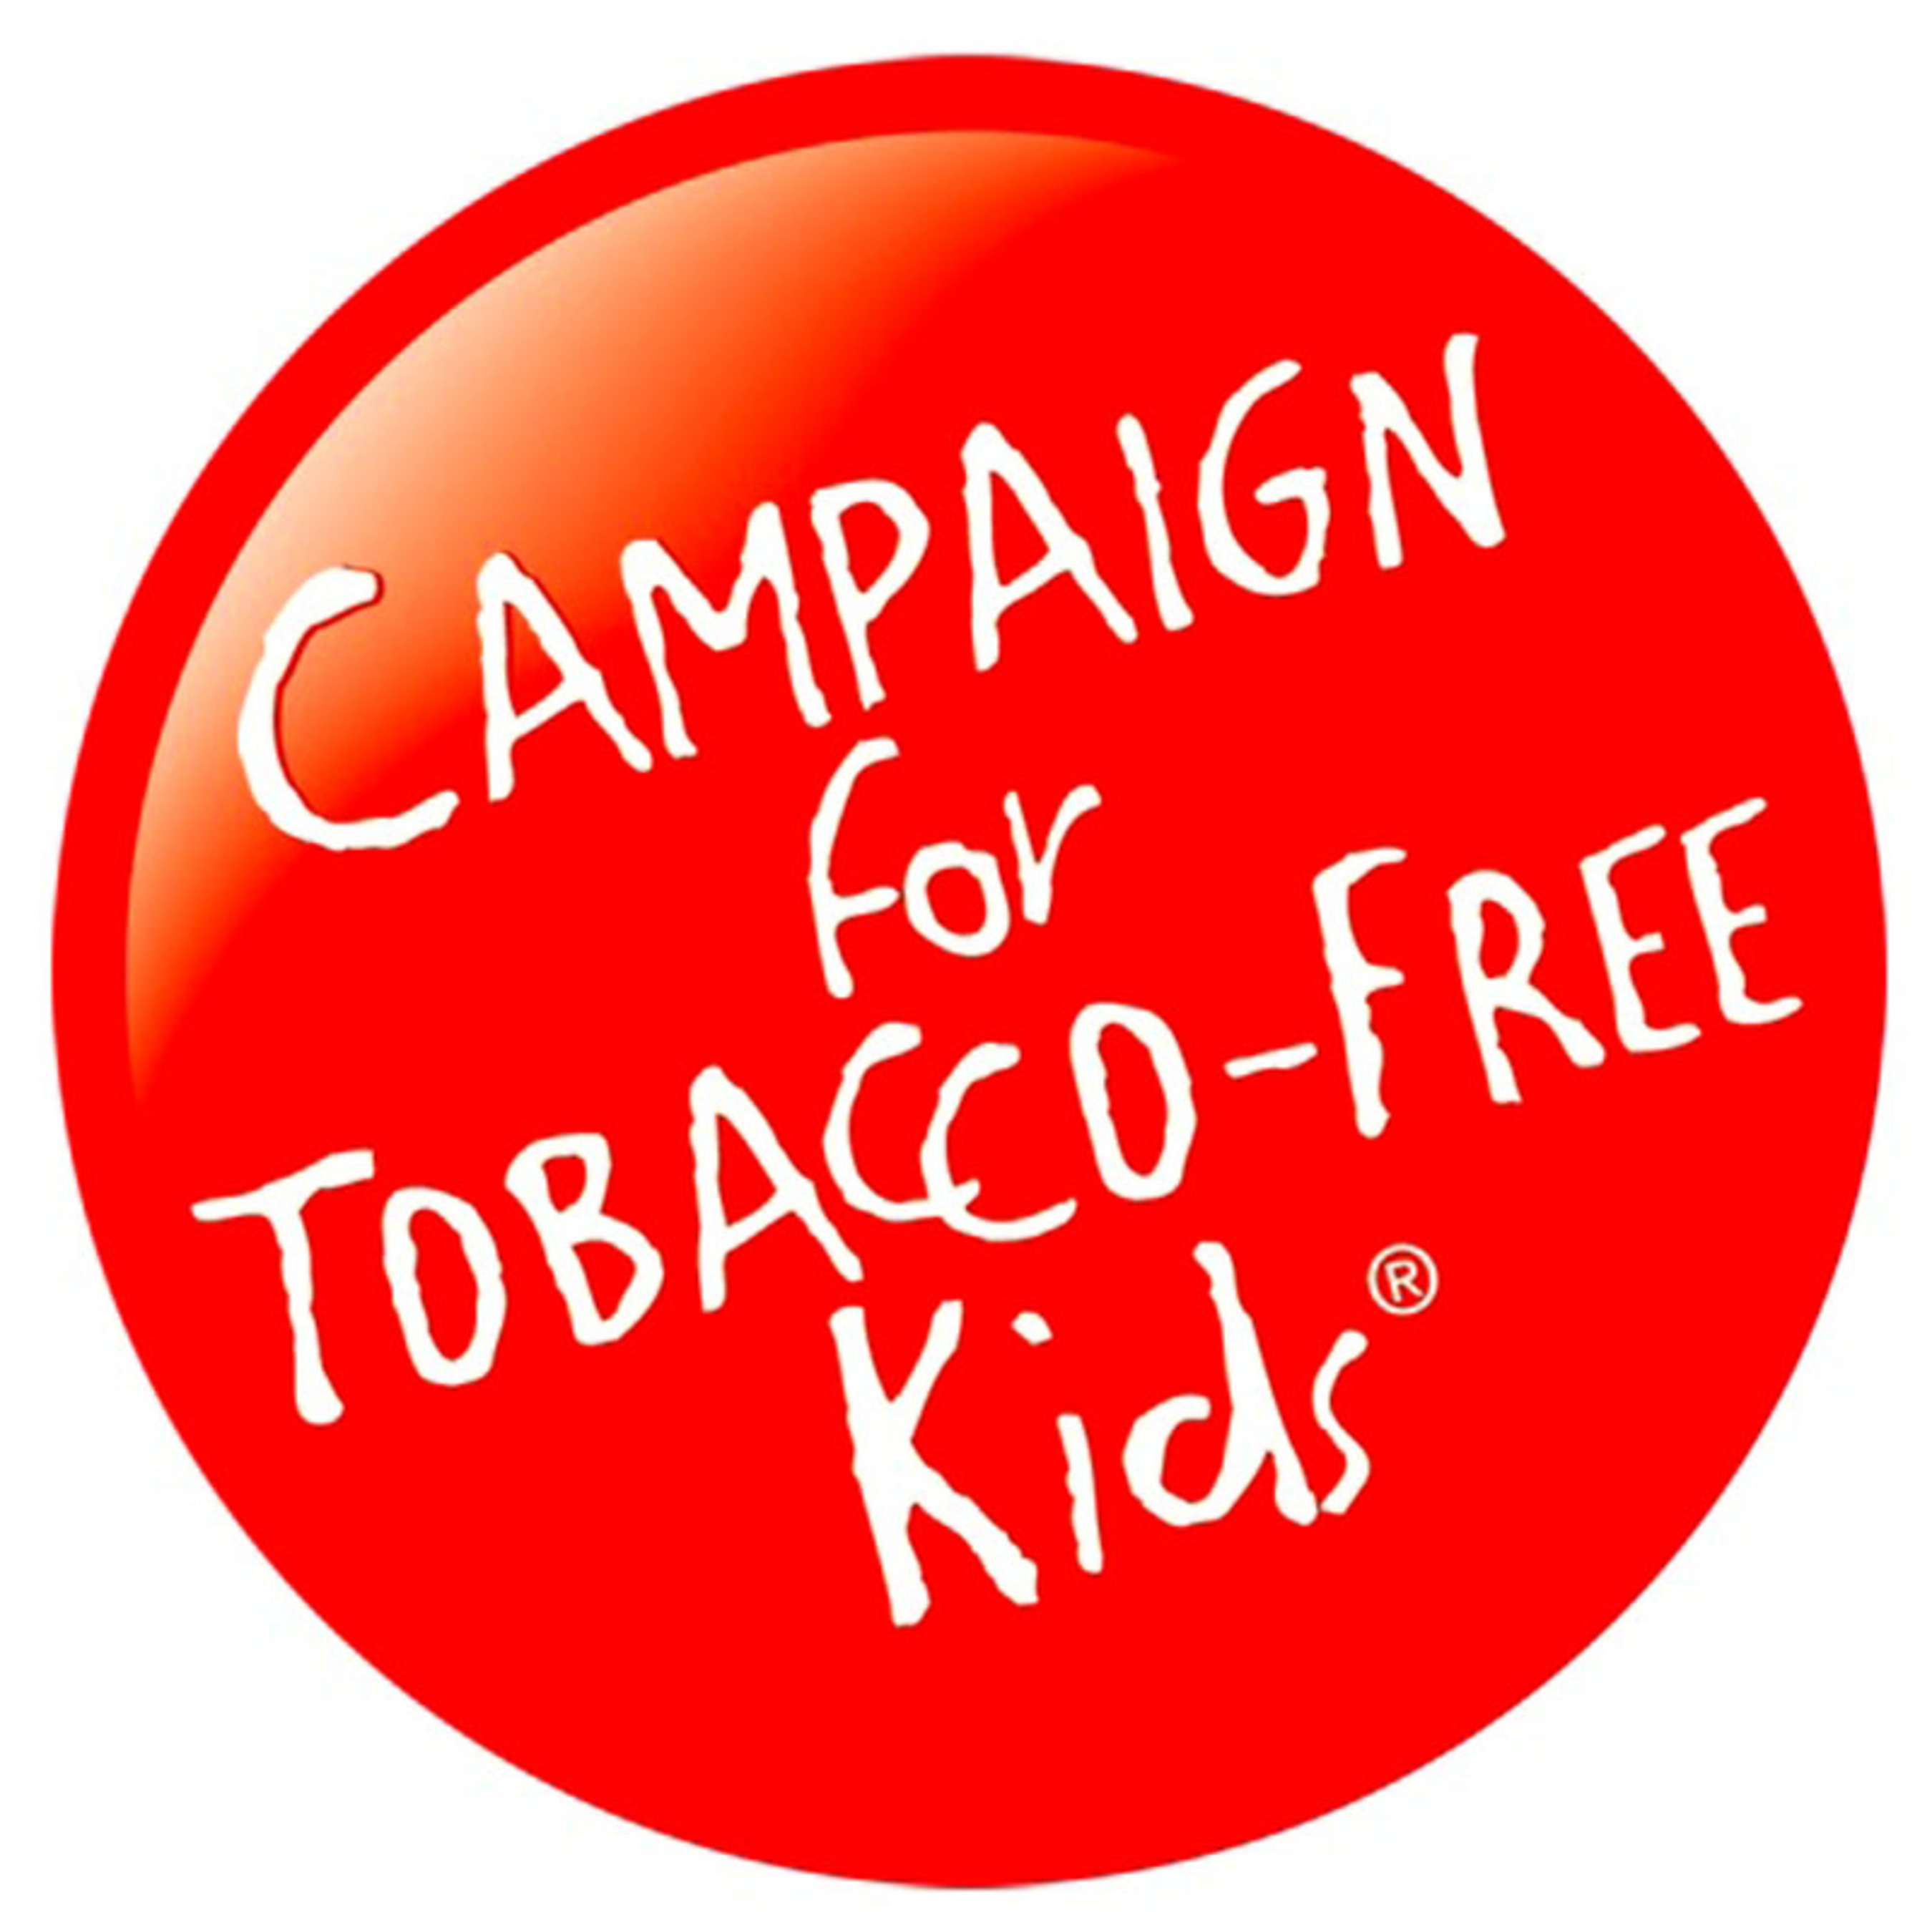 Campaign for Tobacco-Free Kids logo. (PRNewsFoto/Campaign for Tobacco-Free Kids) (PRNewsFoto/)